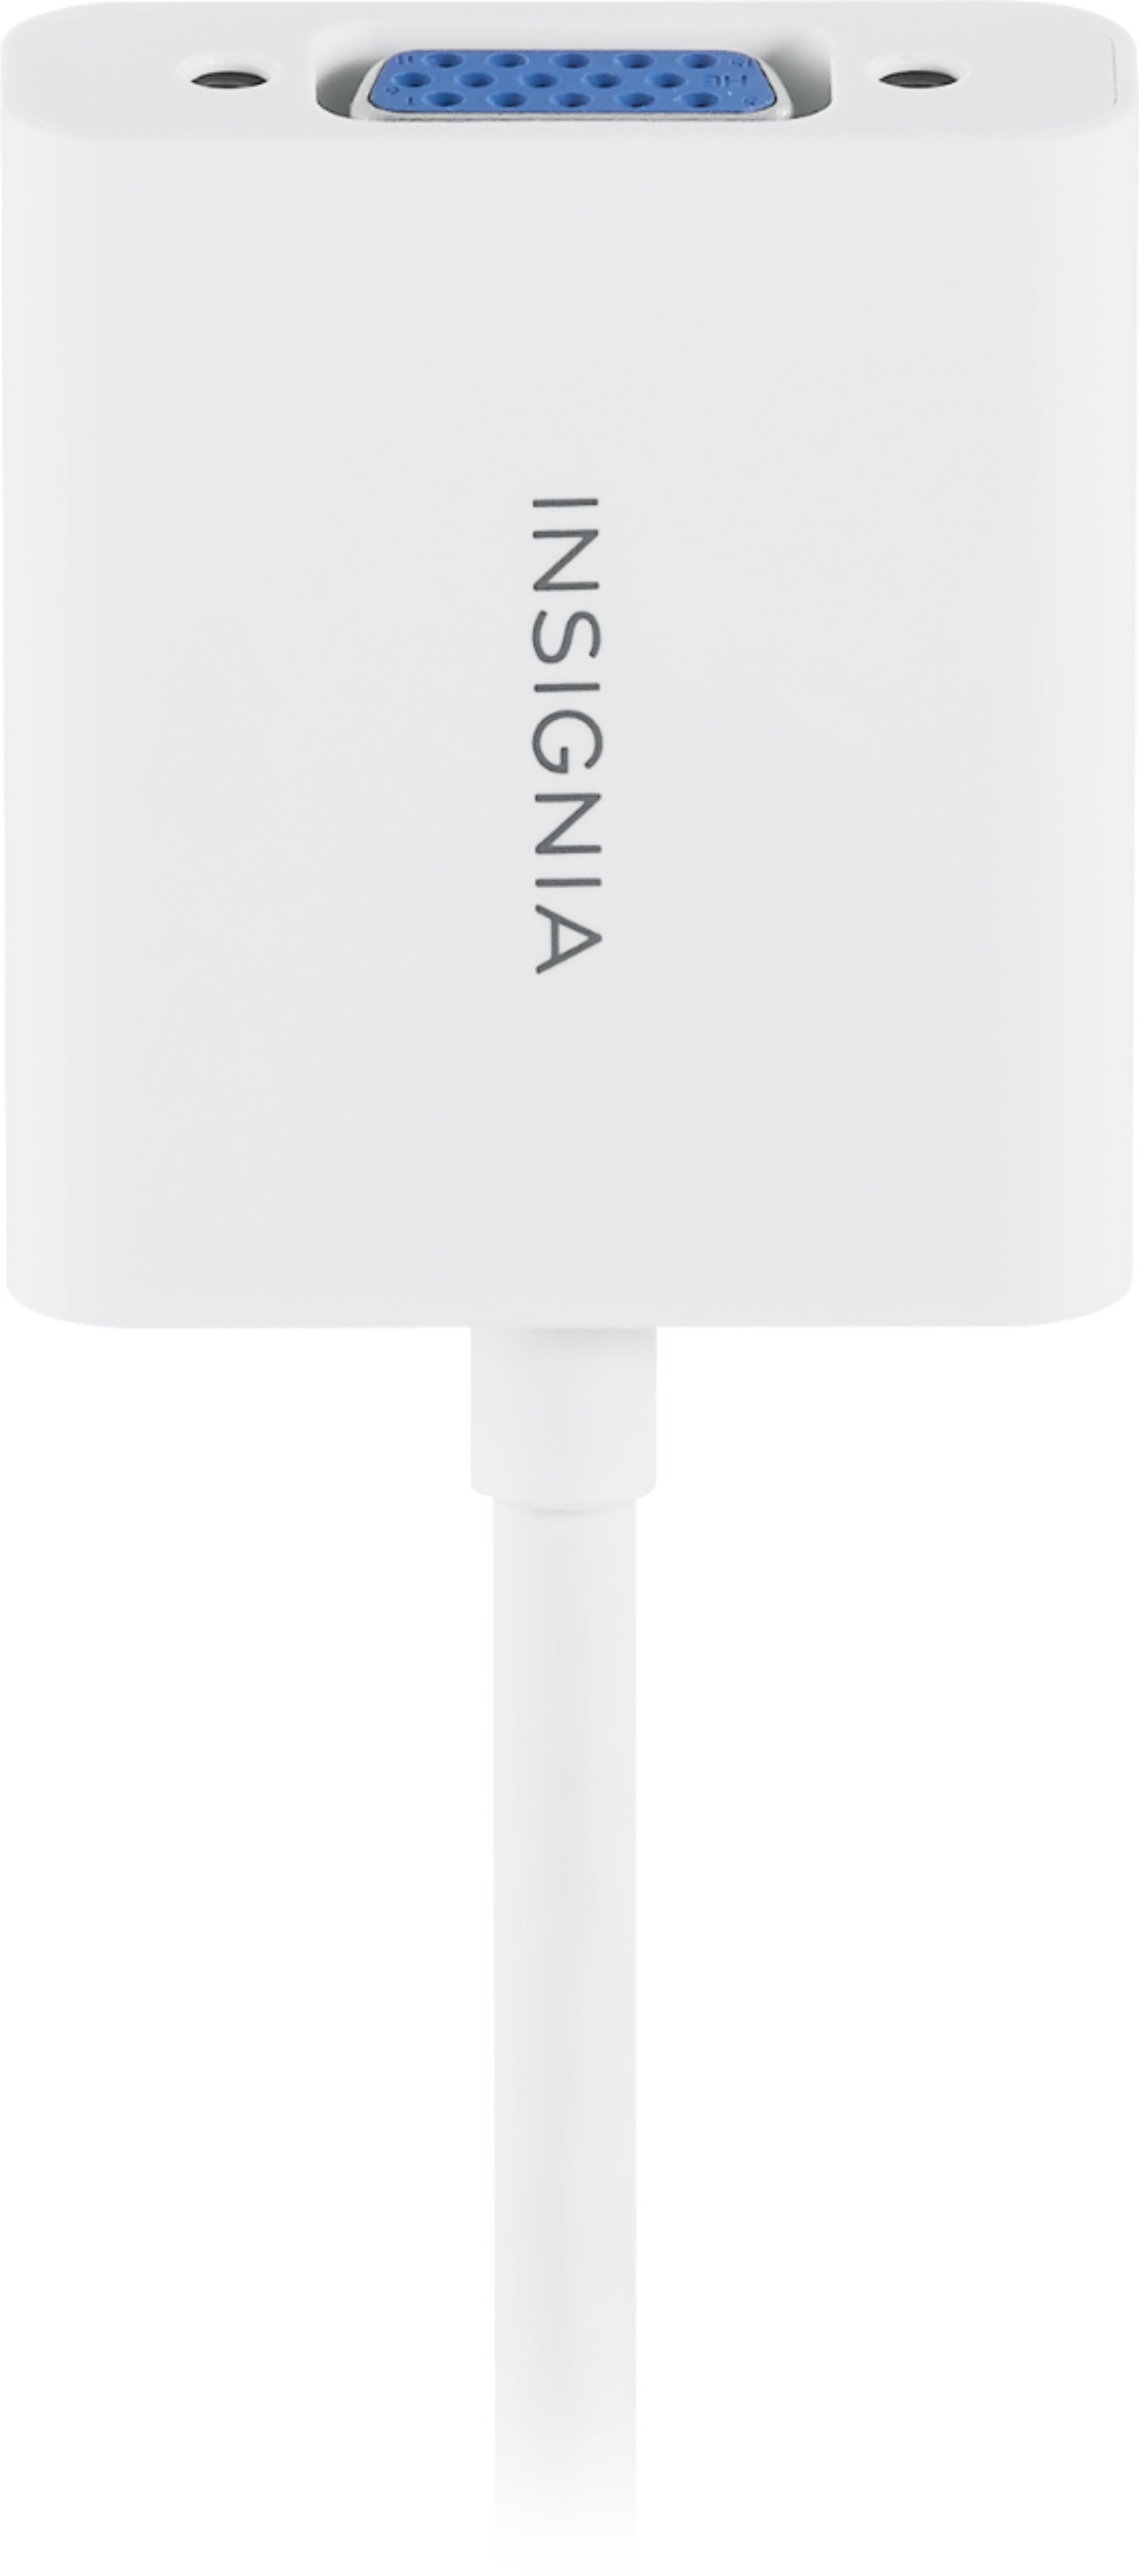 Insignia - HDMI to VGA Adapter - White - Rekes Sales